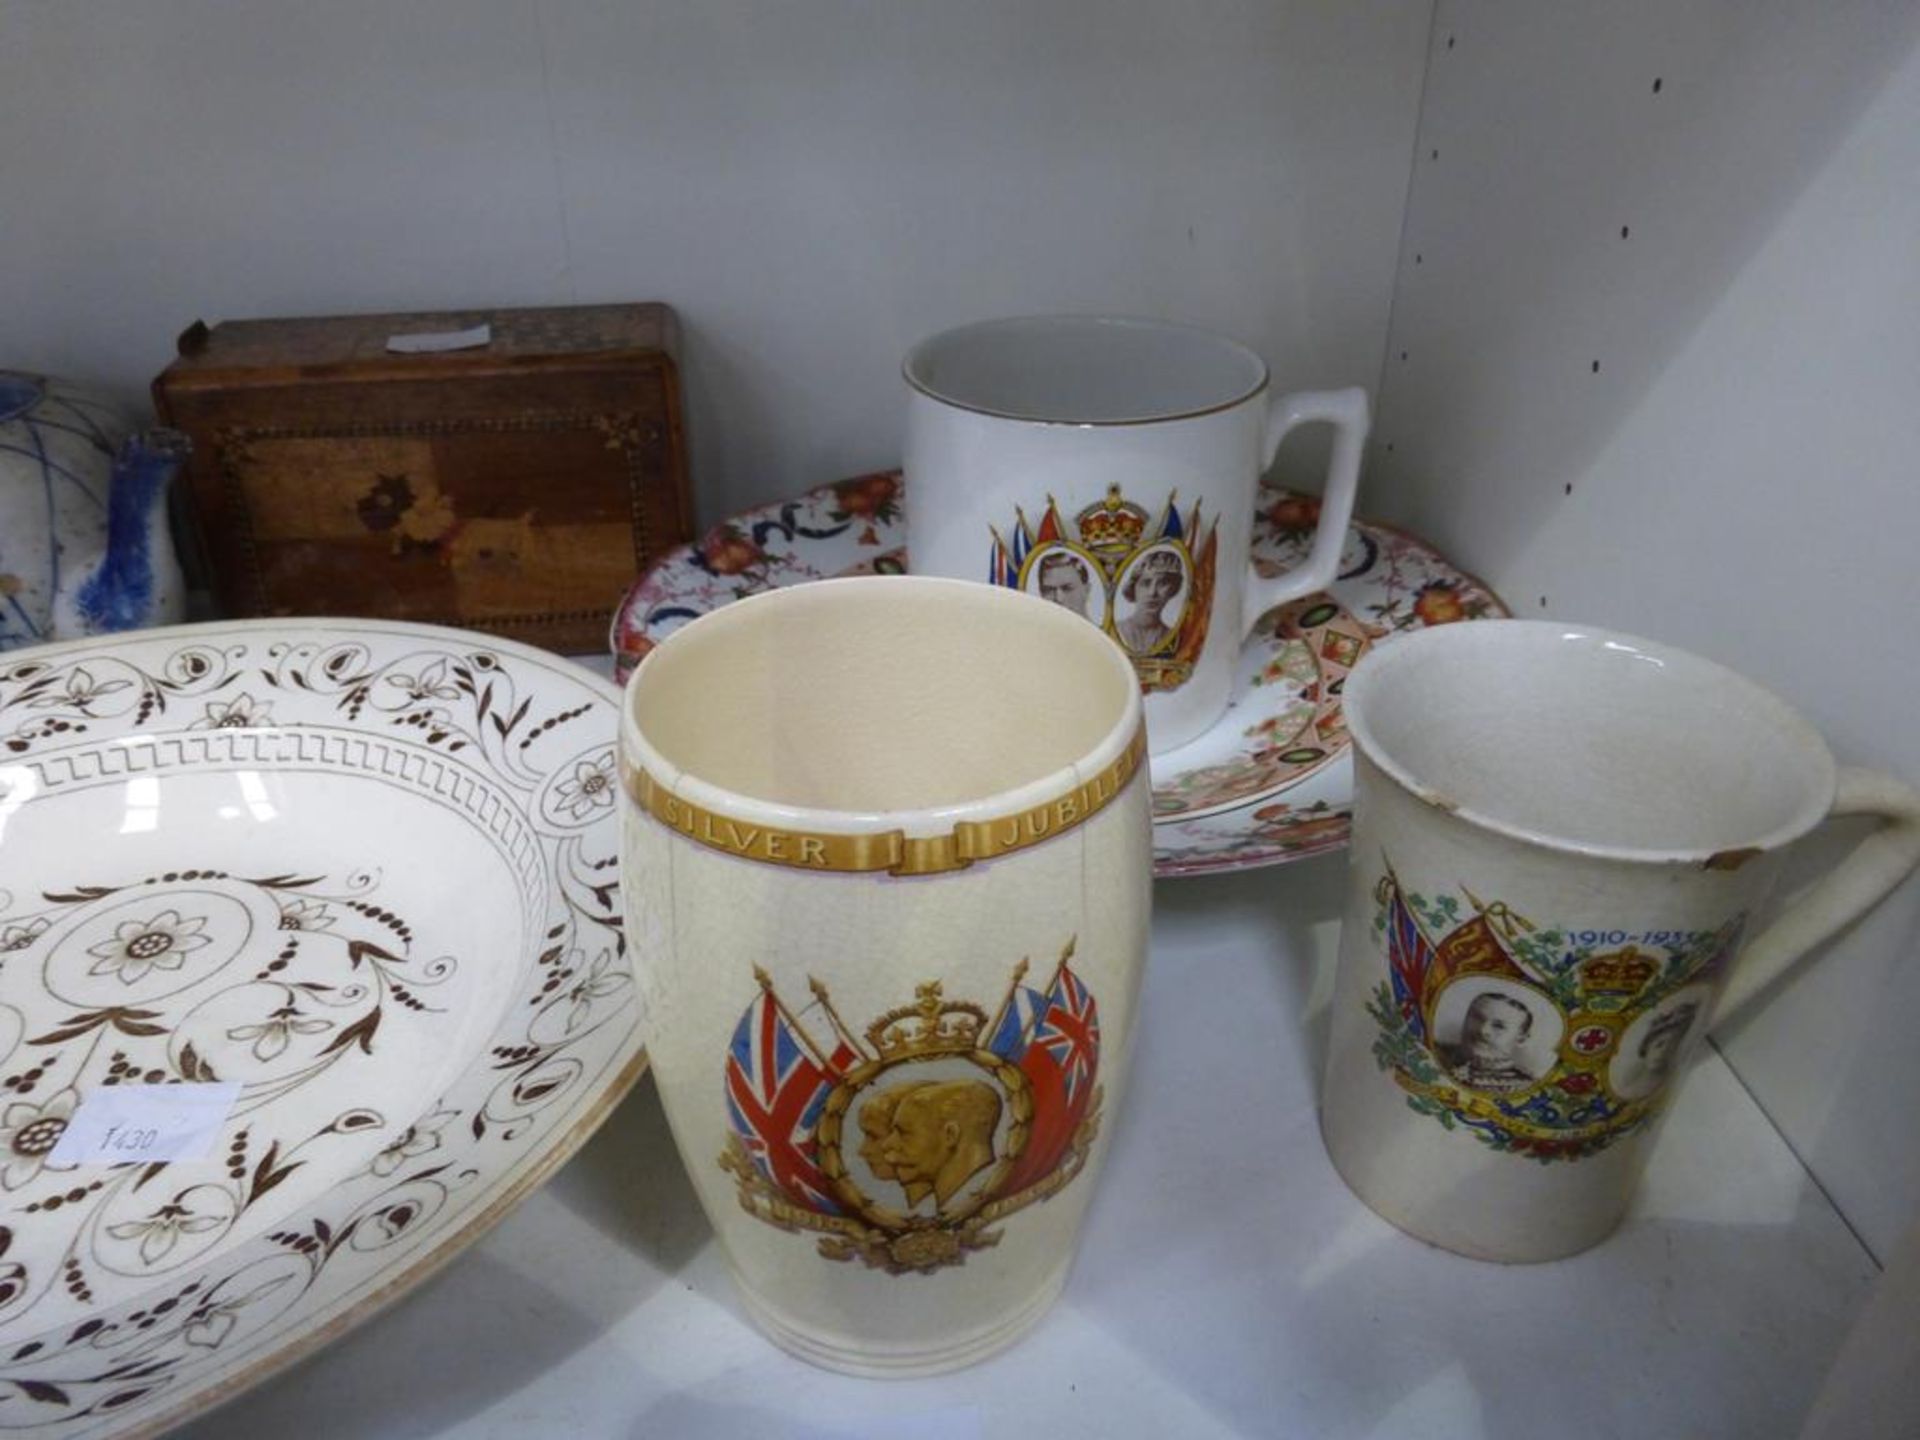 Meakin Dinnerware, Oriental Puzzle Box, Royalty Commemorative Mugs etc. (est £20-£30) - Image 6 of 6